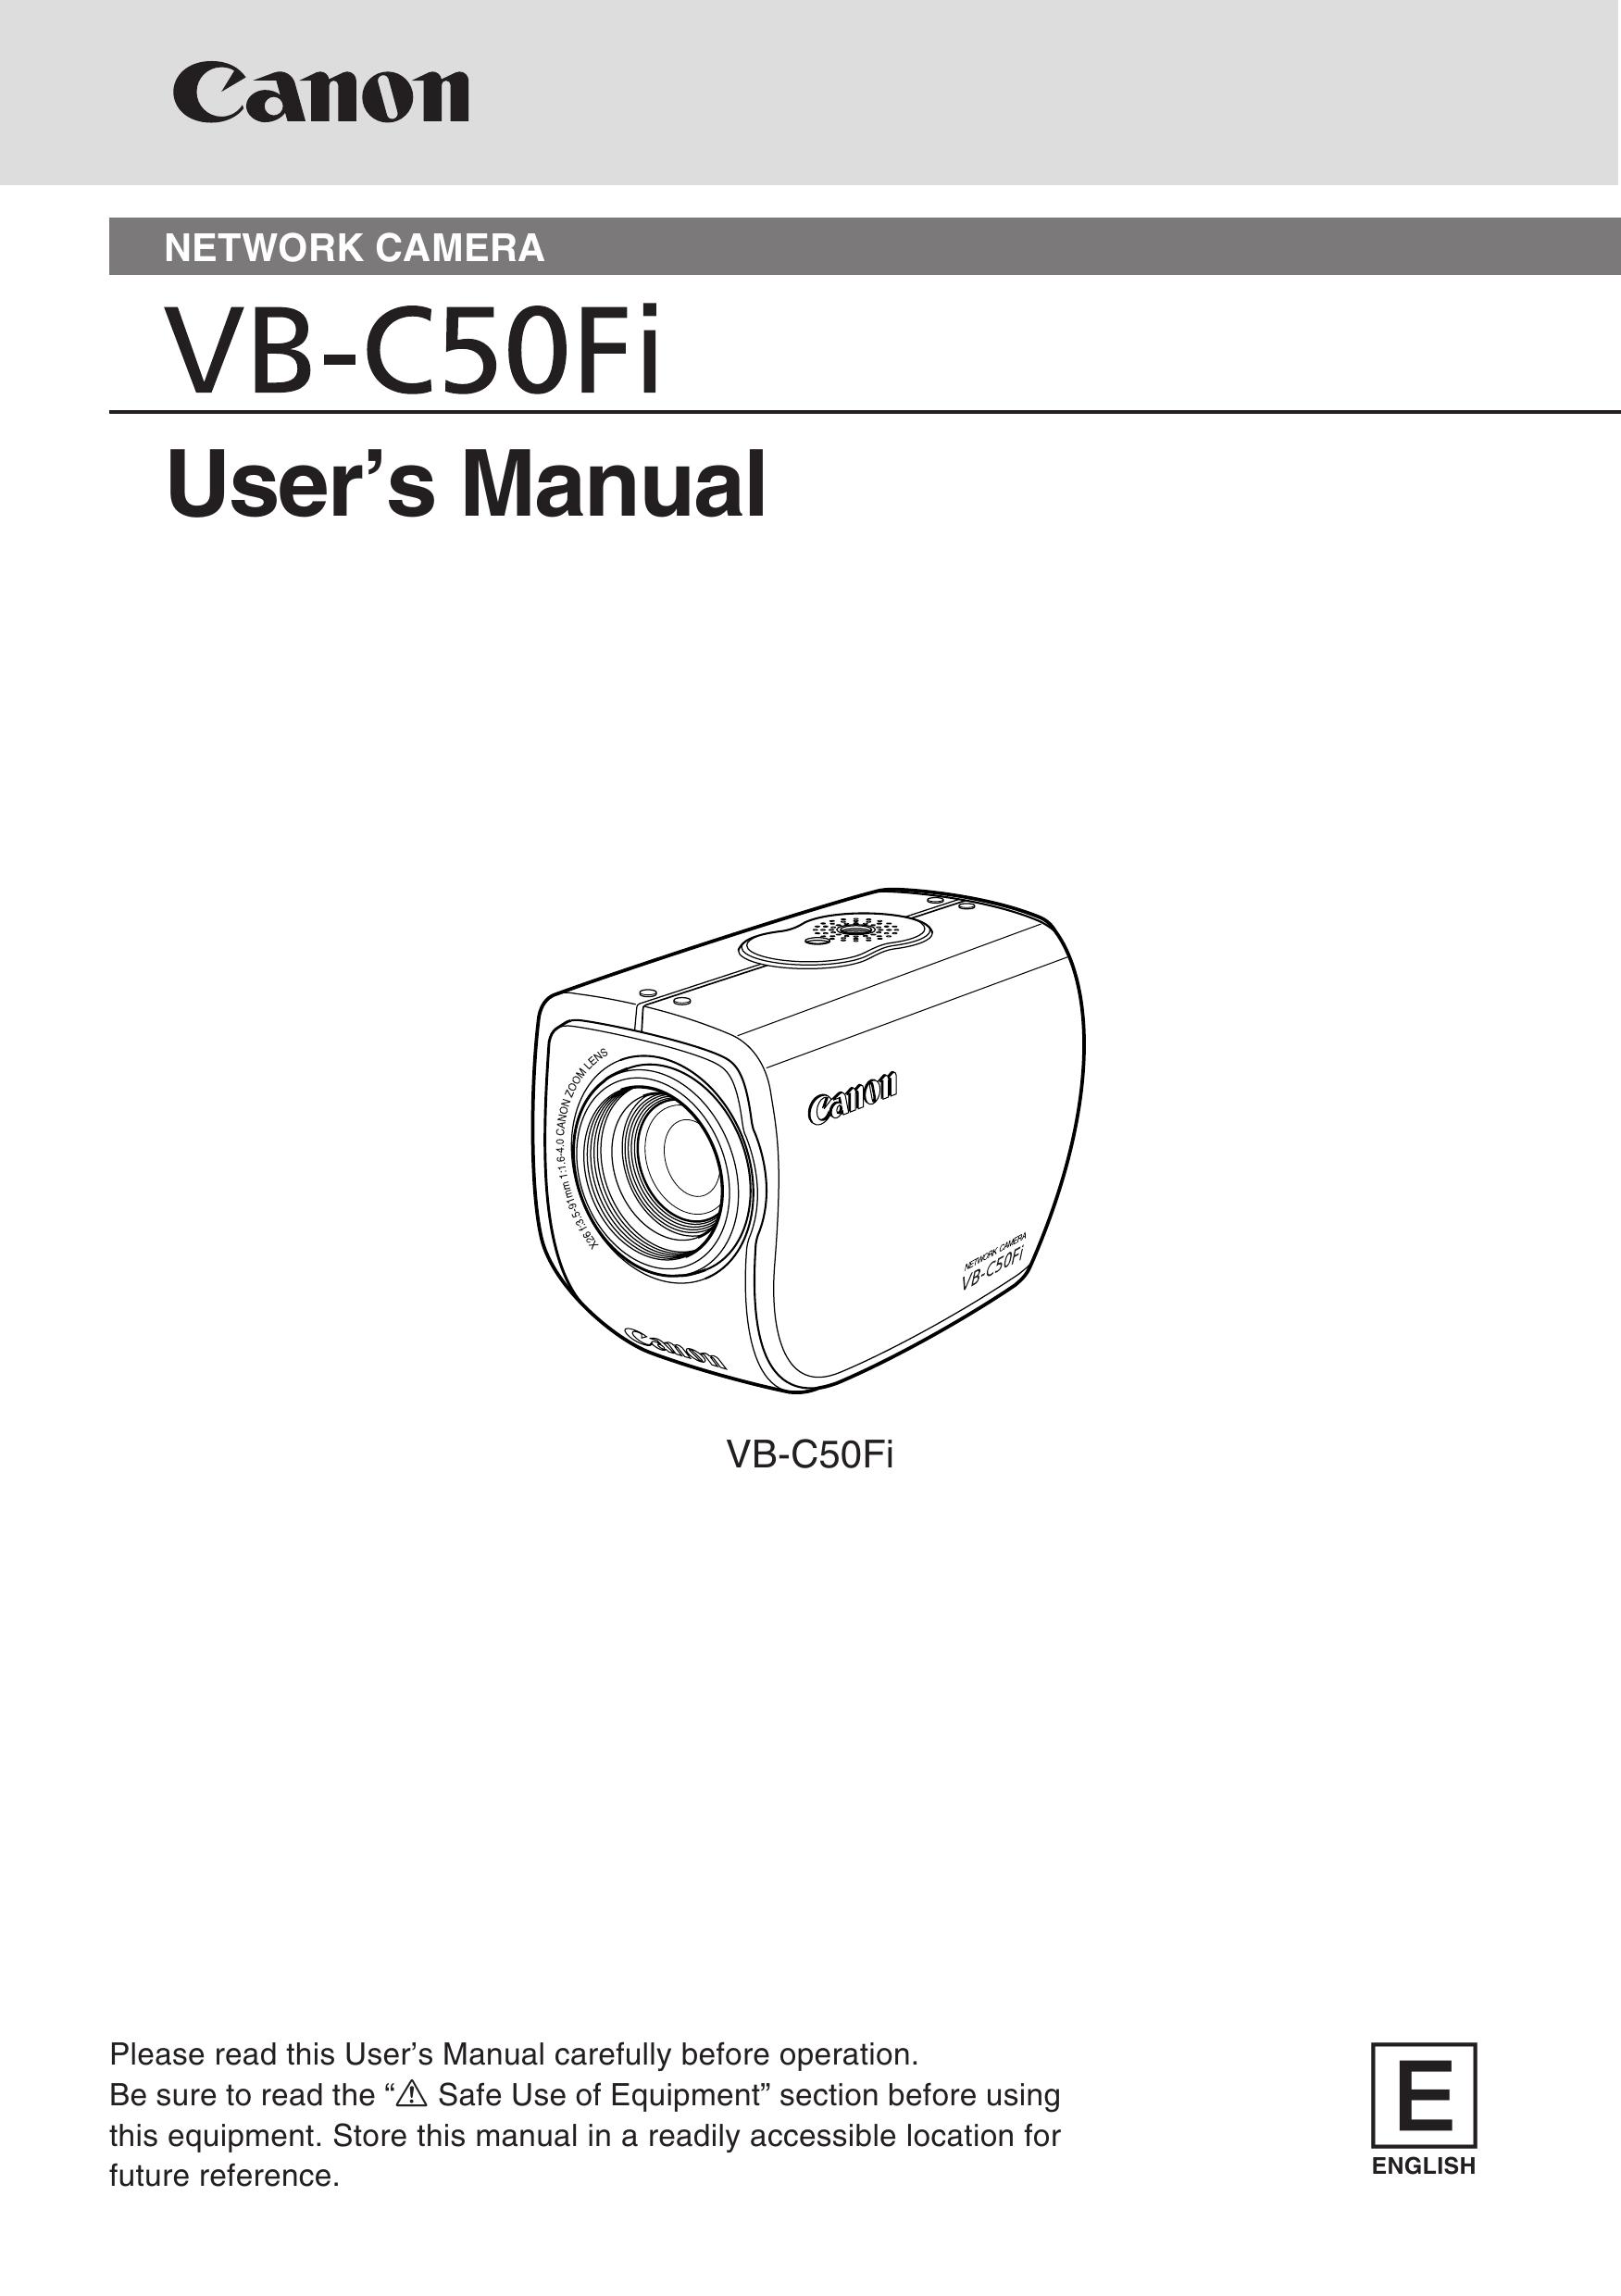 Canon VB-C50FI Security Camera User Manual